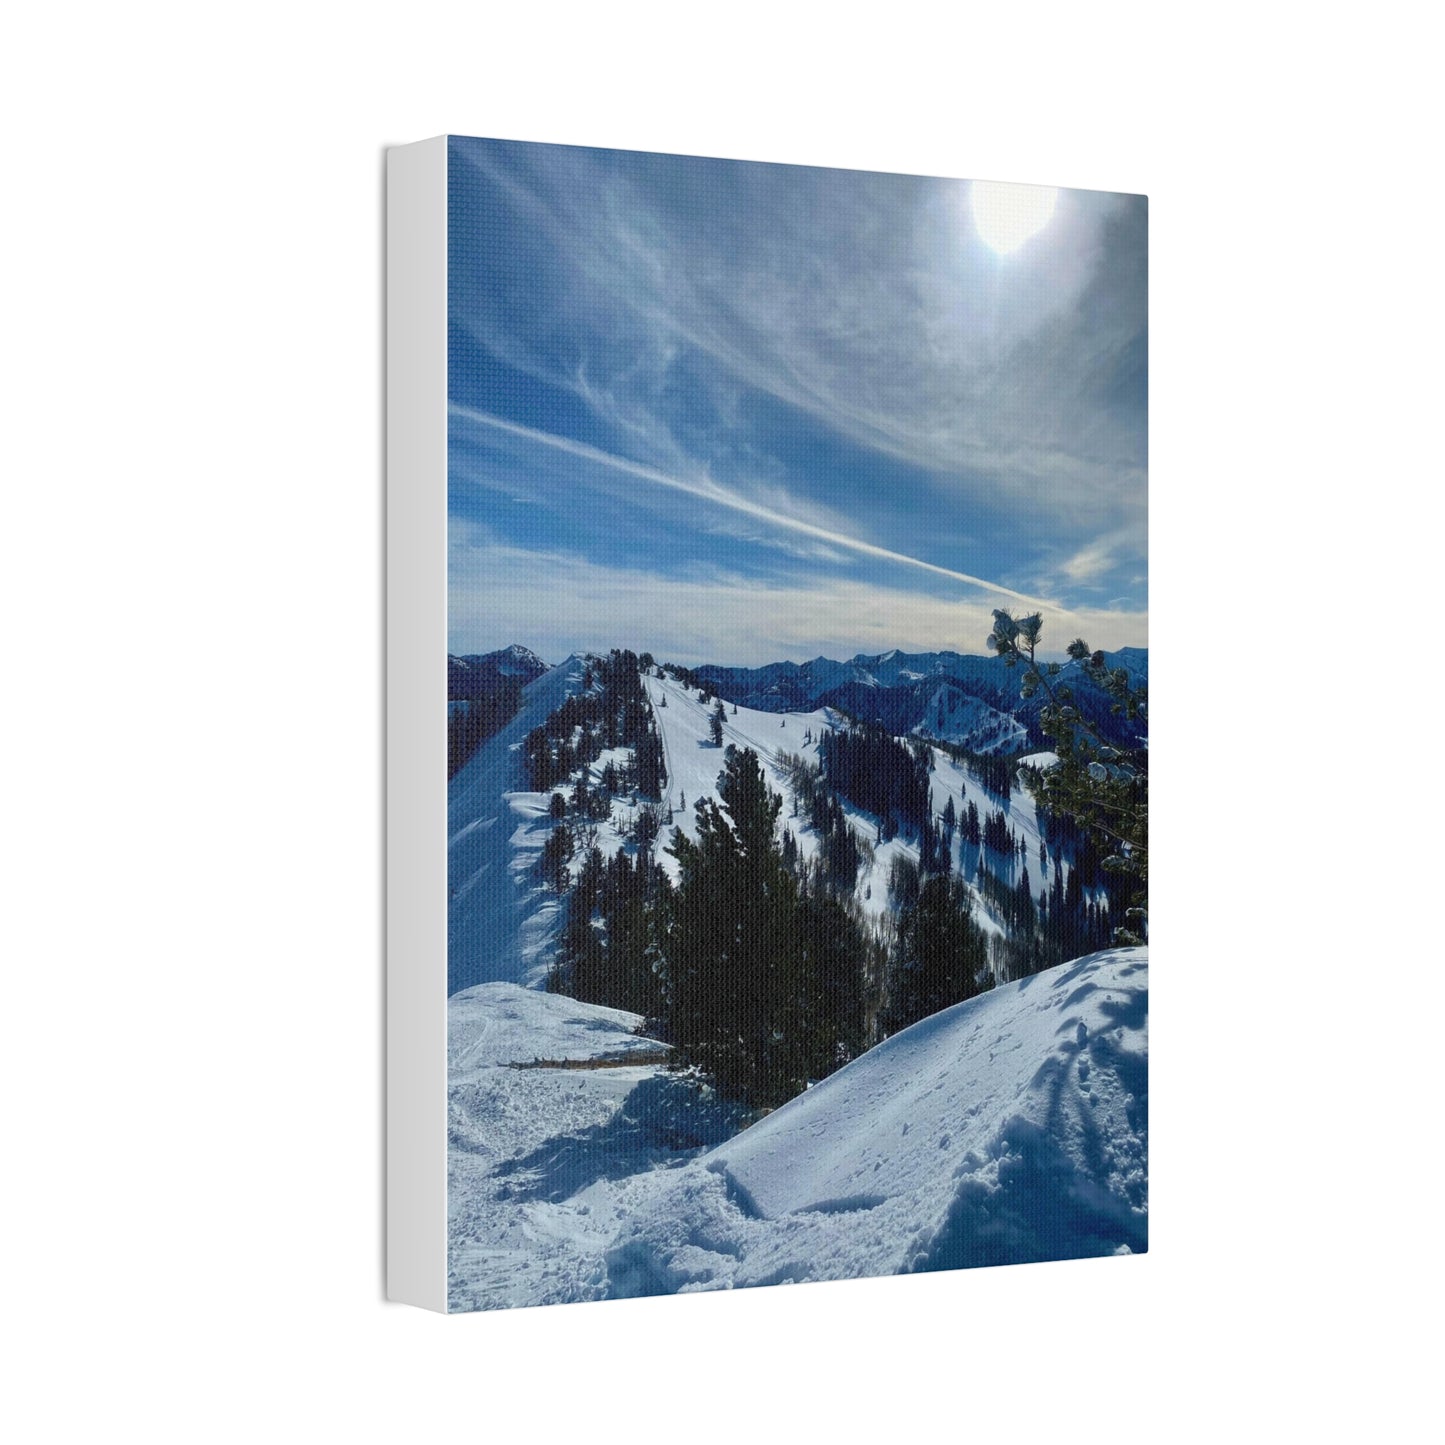 Ski Summit, Ninety-Nine 90, Park City, Utah Canvas Wall Print (Free Shipping)